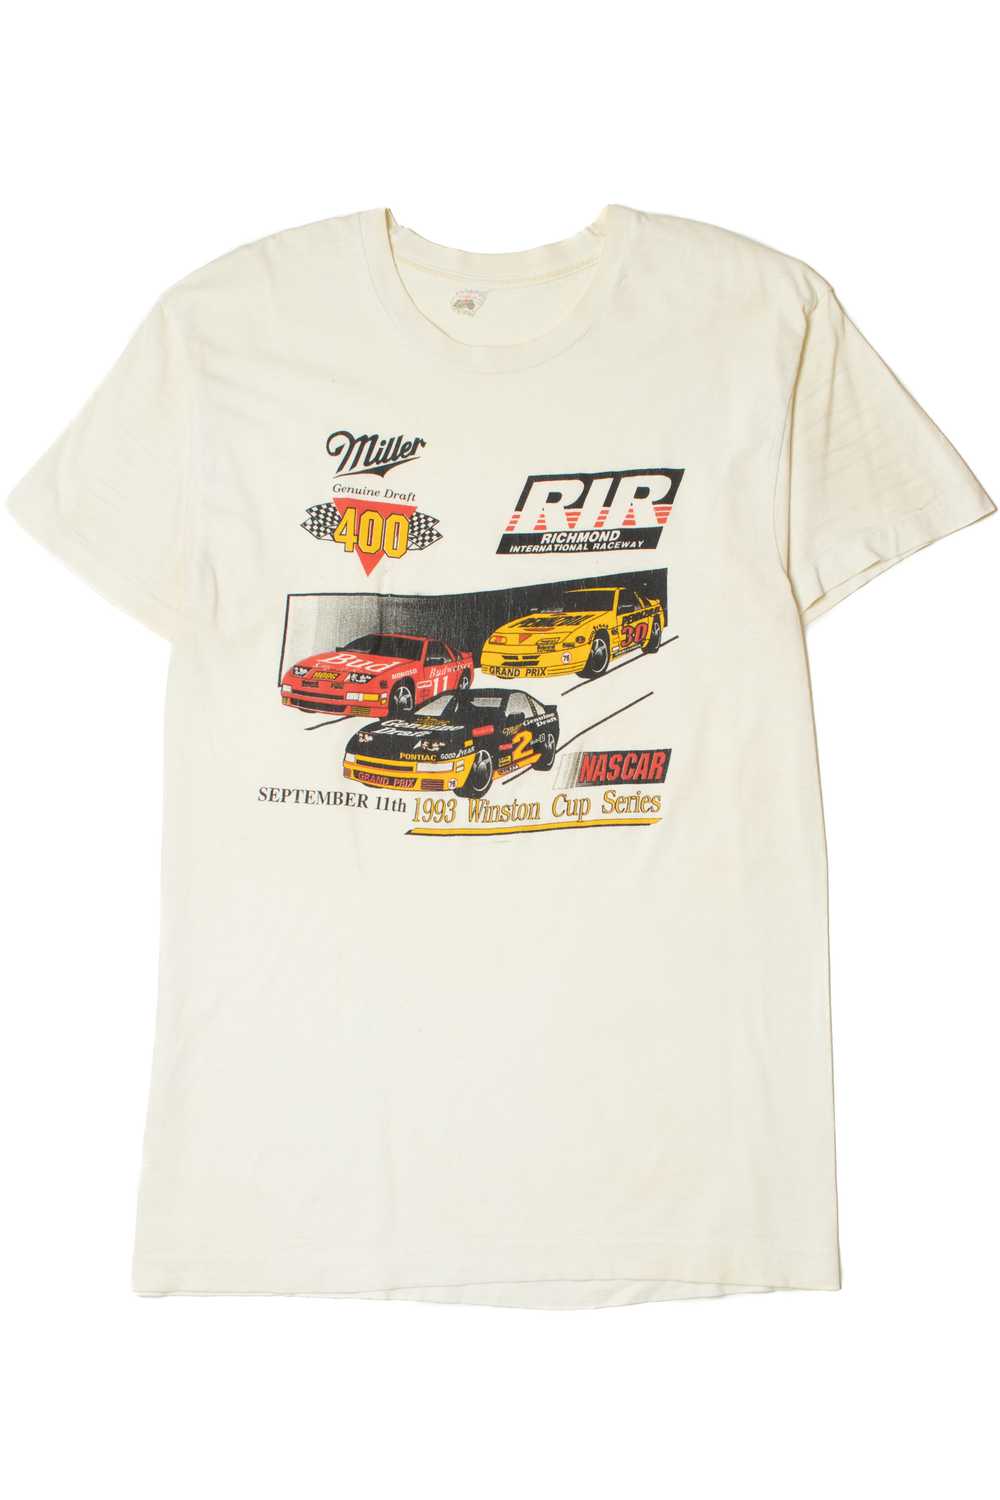 Vintage 1993 NASCAR Winston Cup Series Racing T-S… - image 1